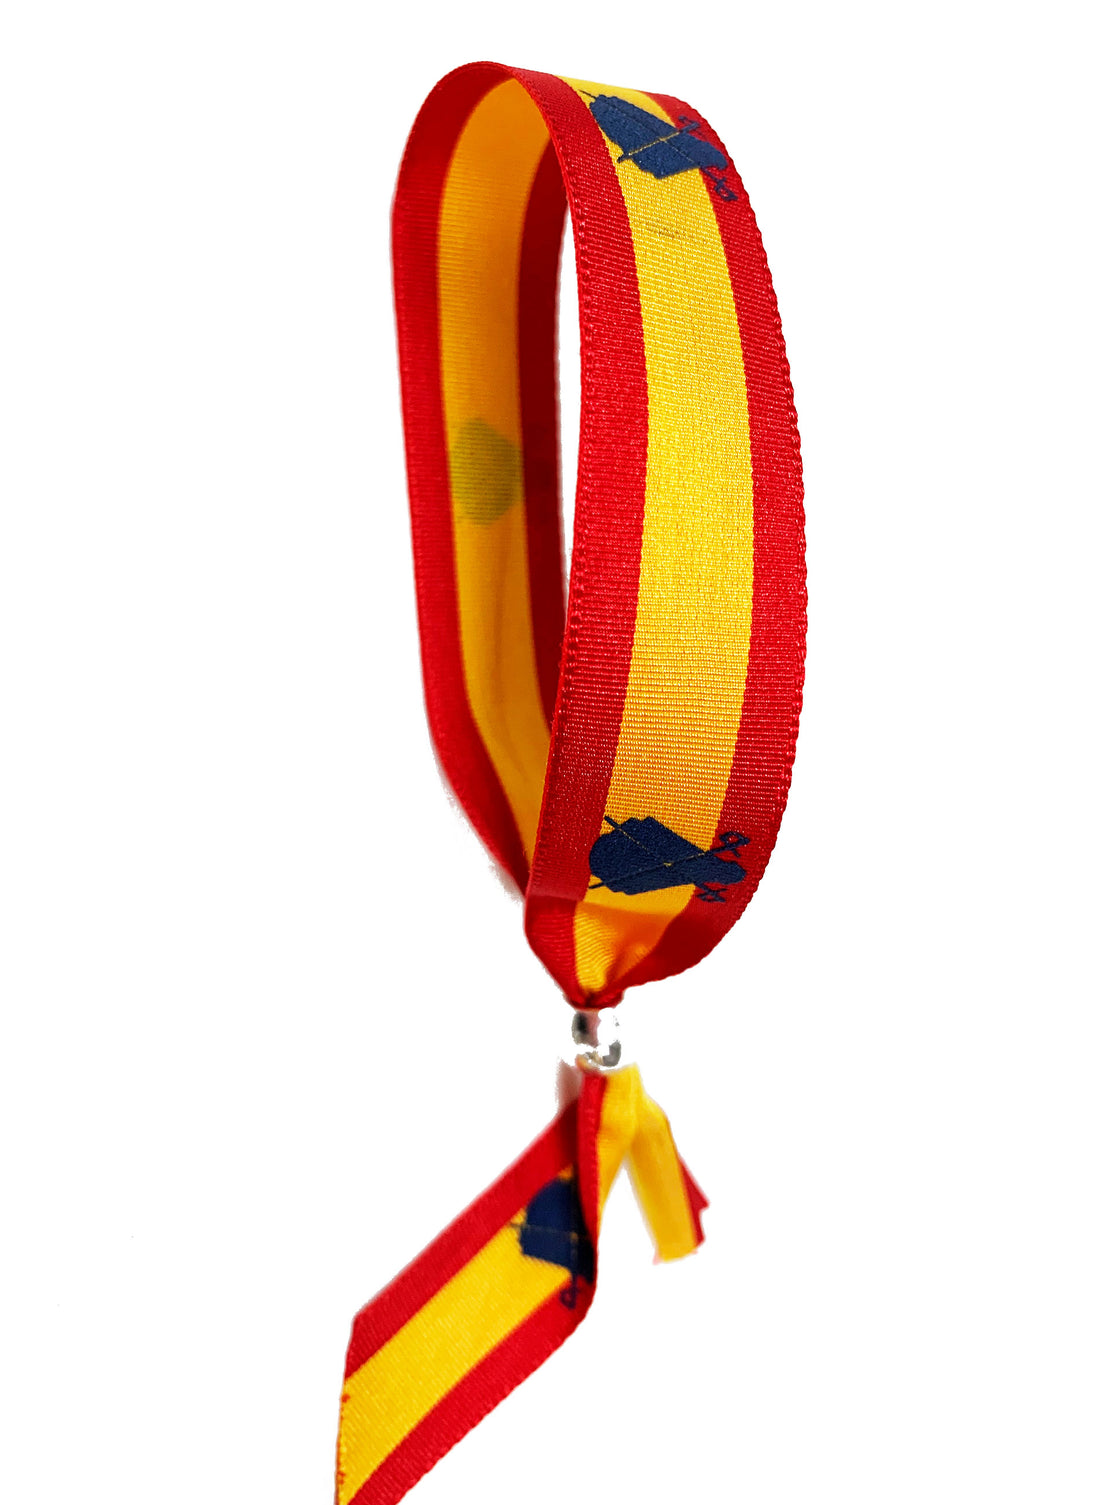 Spain Fabric Bracelet with El Capote logo